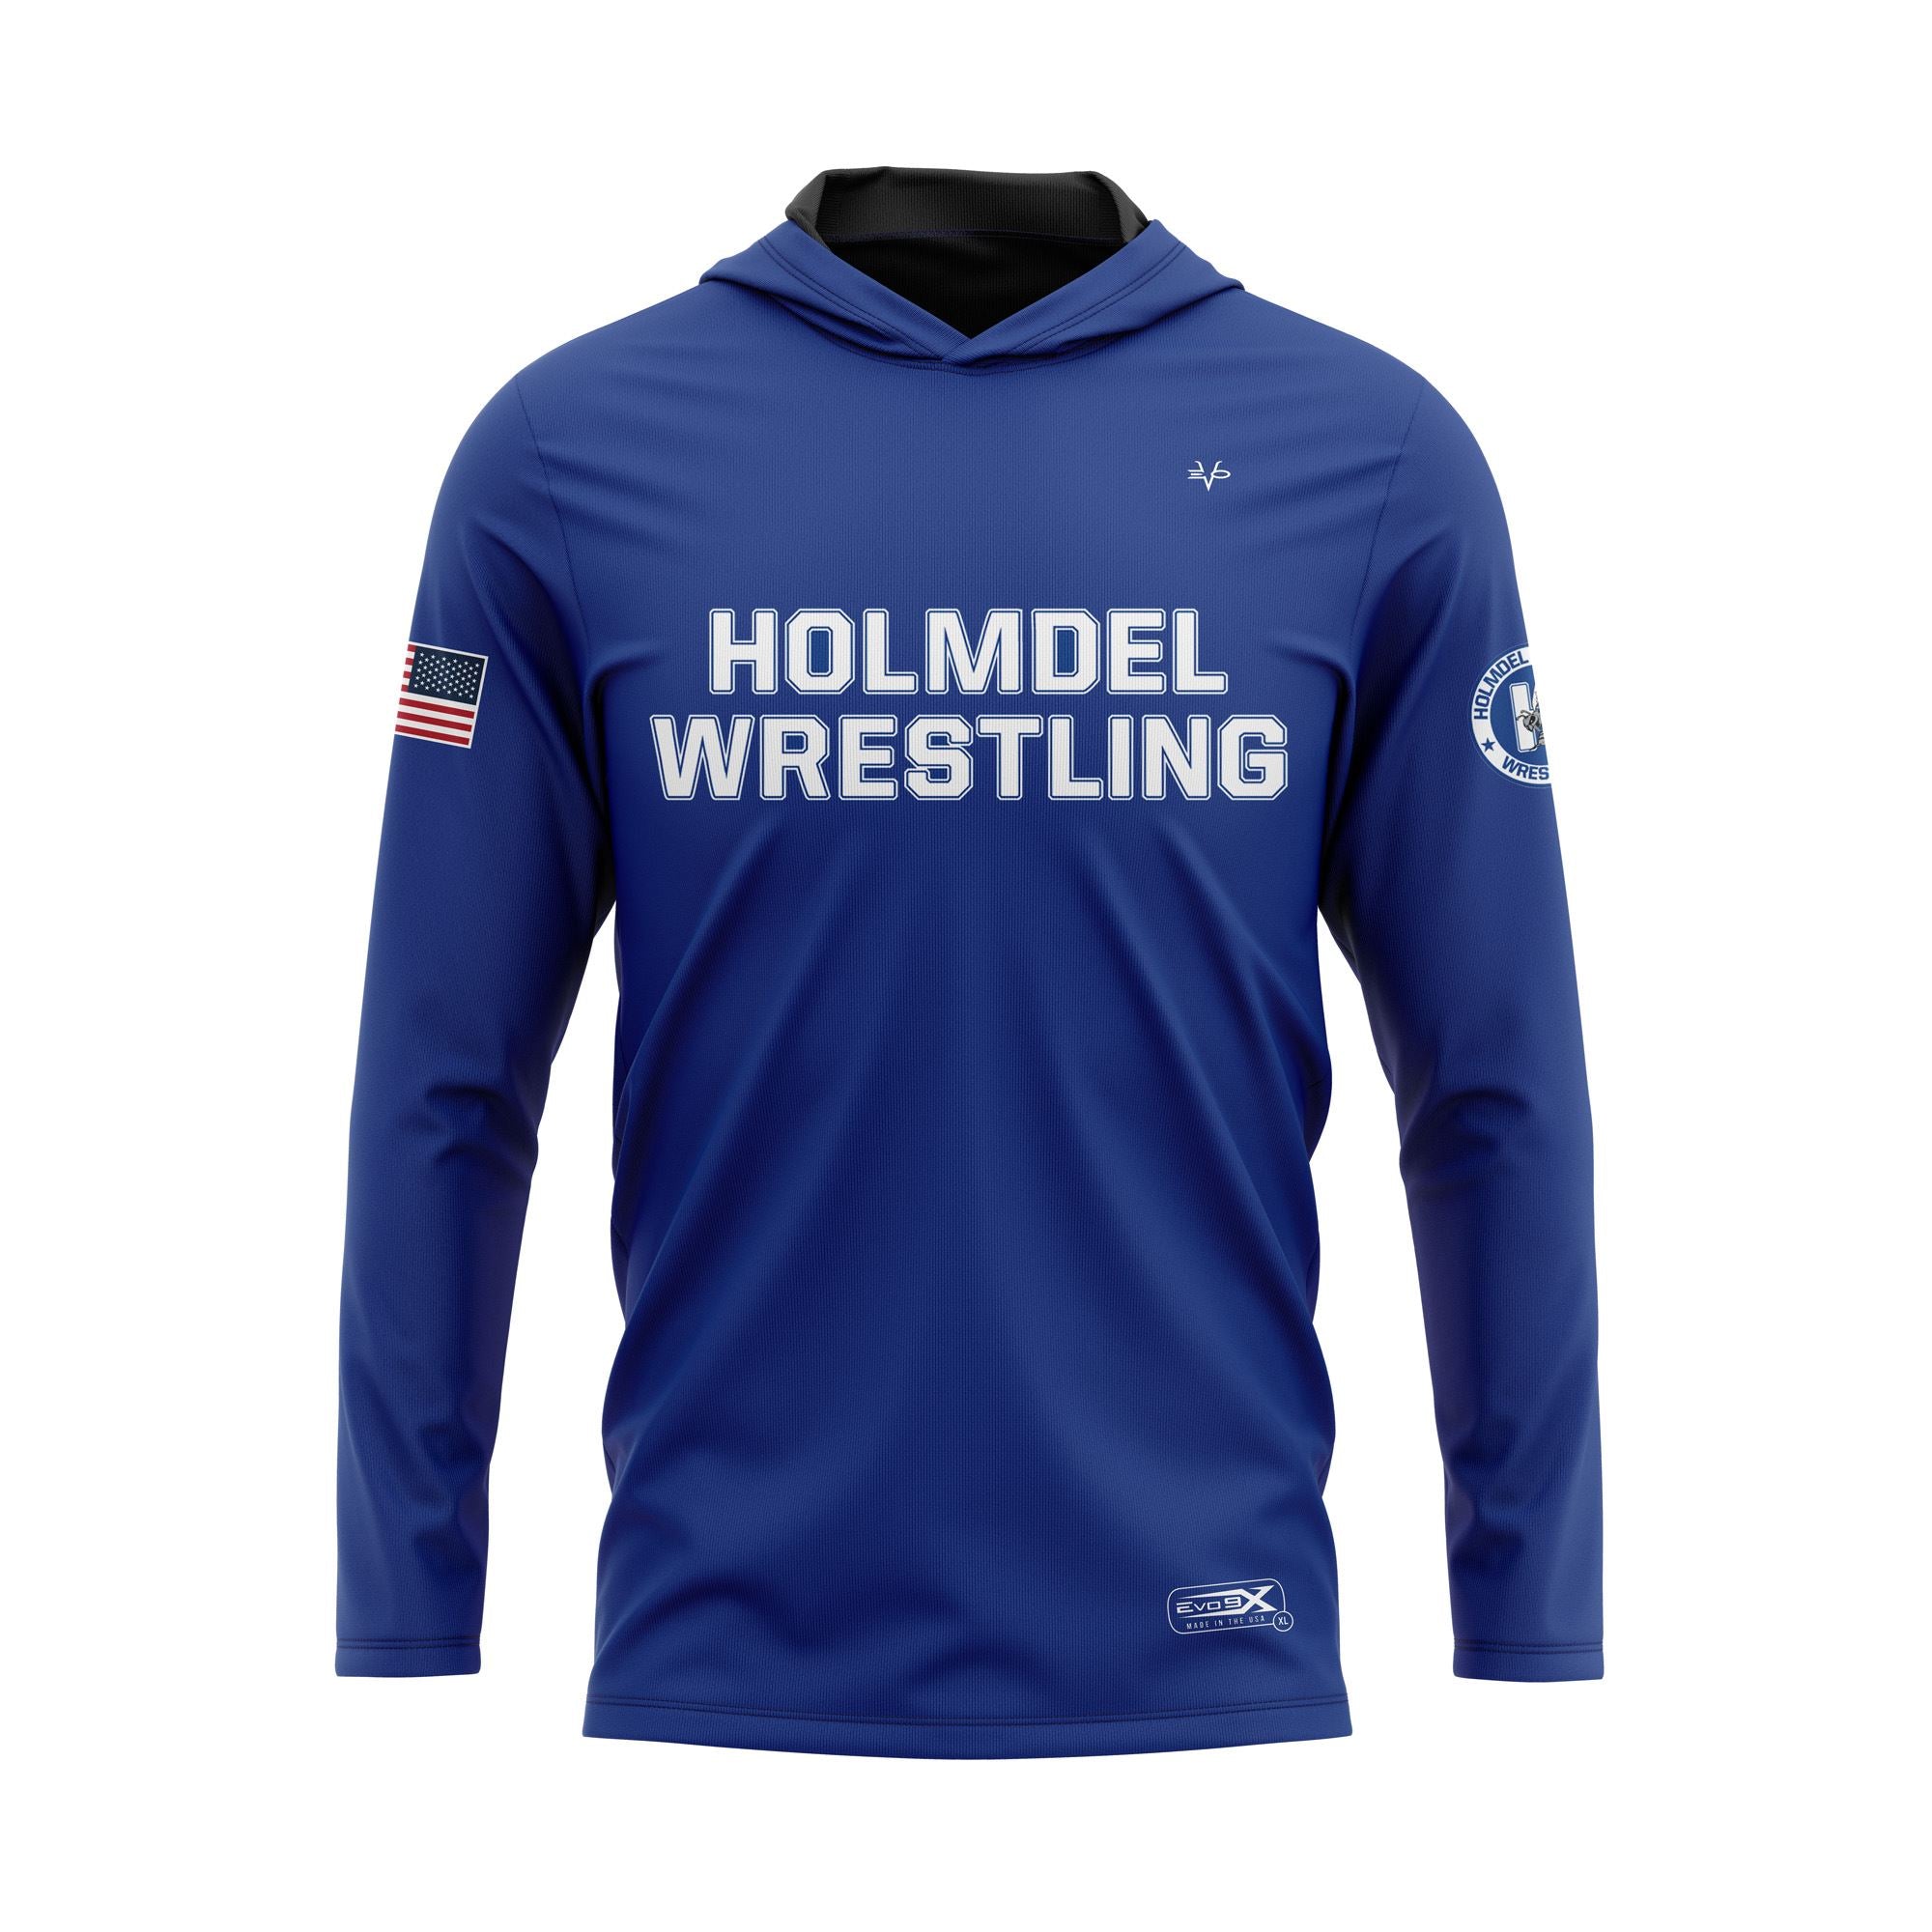 HOLMDEL WRESTLING Sublimated Lightweight Long Sleeve Blue Hoodie